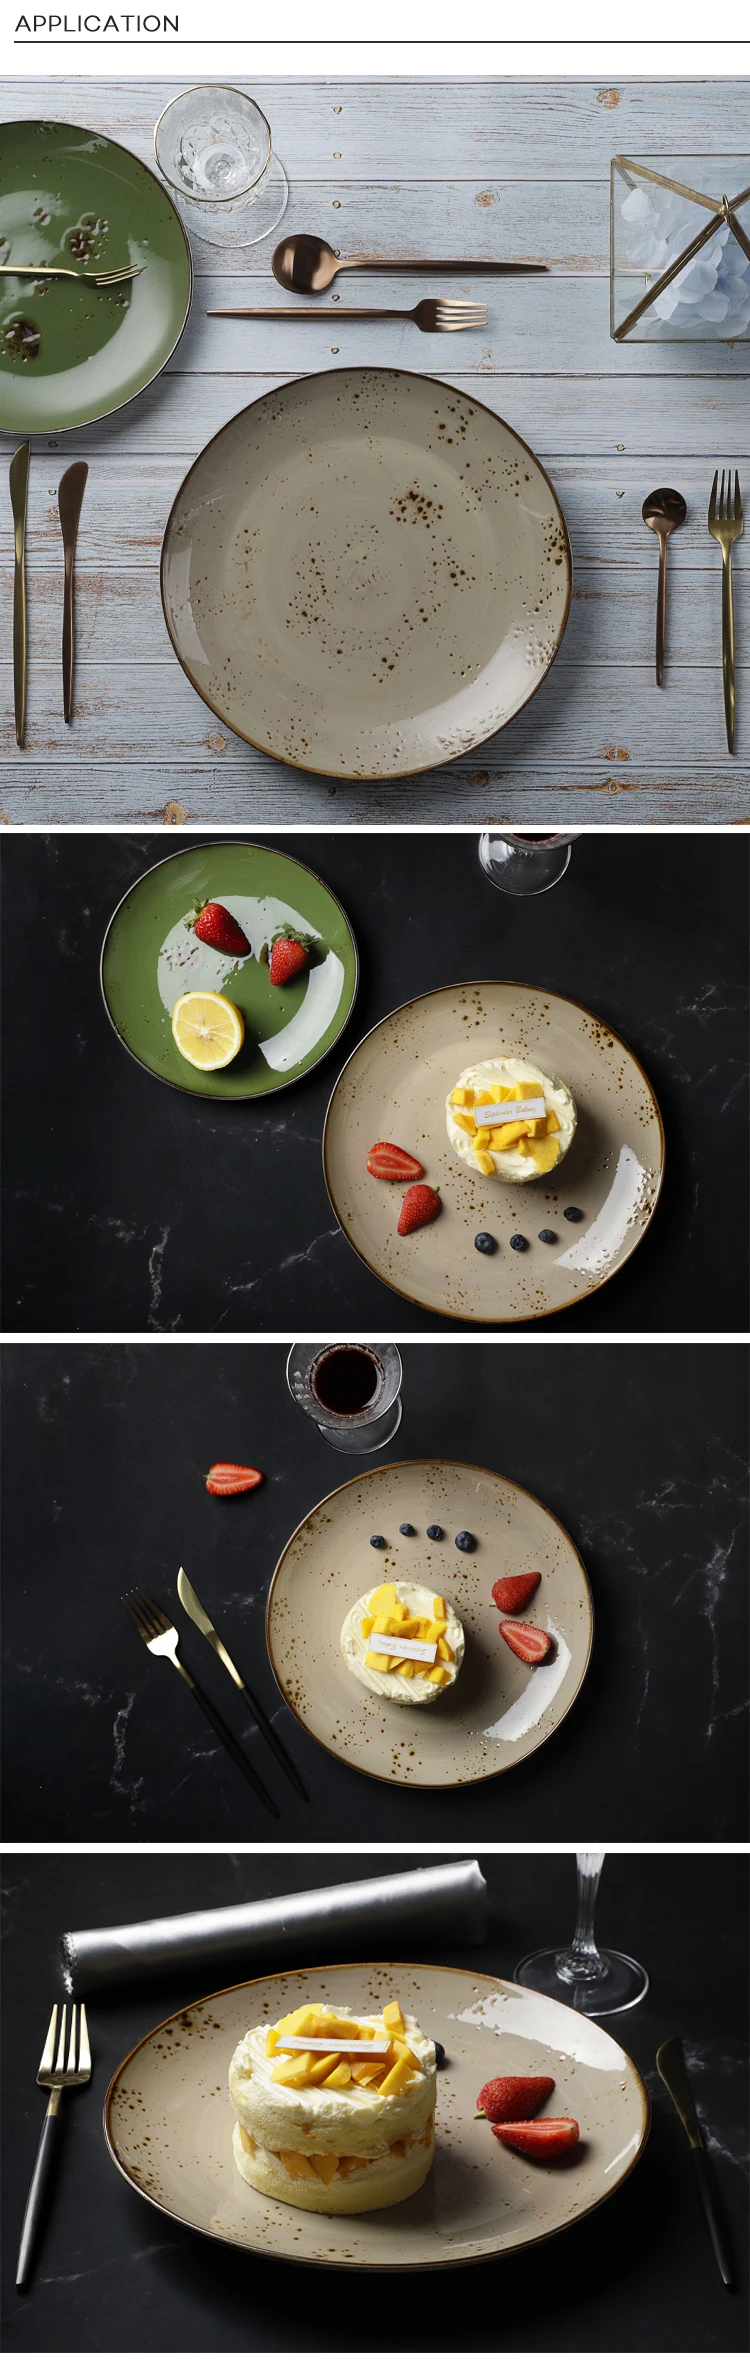 28ceramics Rustic Guangzhou Tableware 8.25/10.5 Inch Dinner Plates Used In Wedding, Modern Tableware Cater Plate~